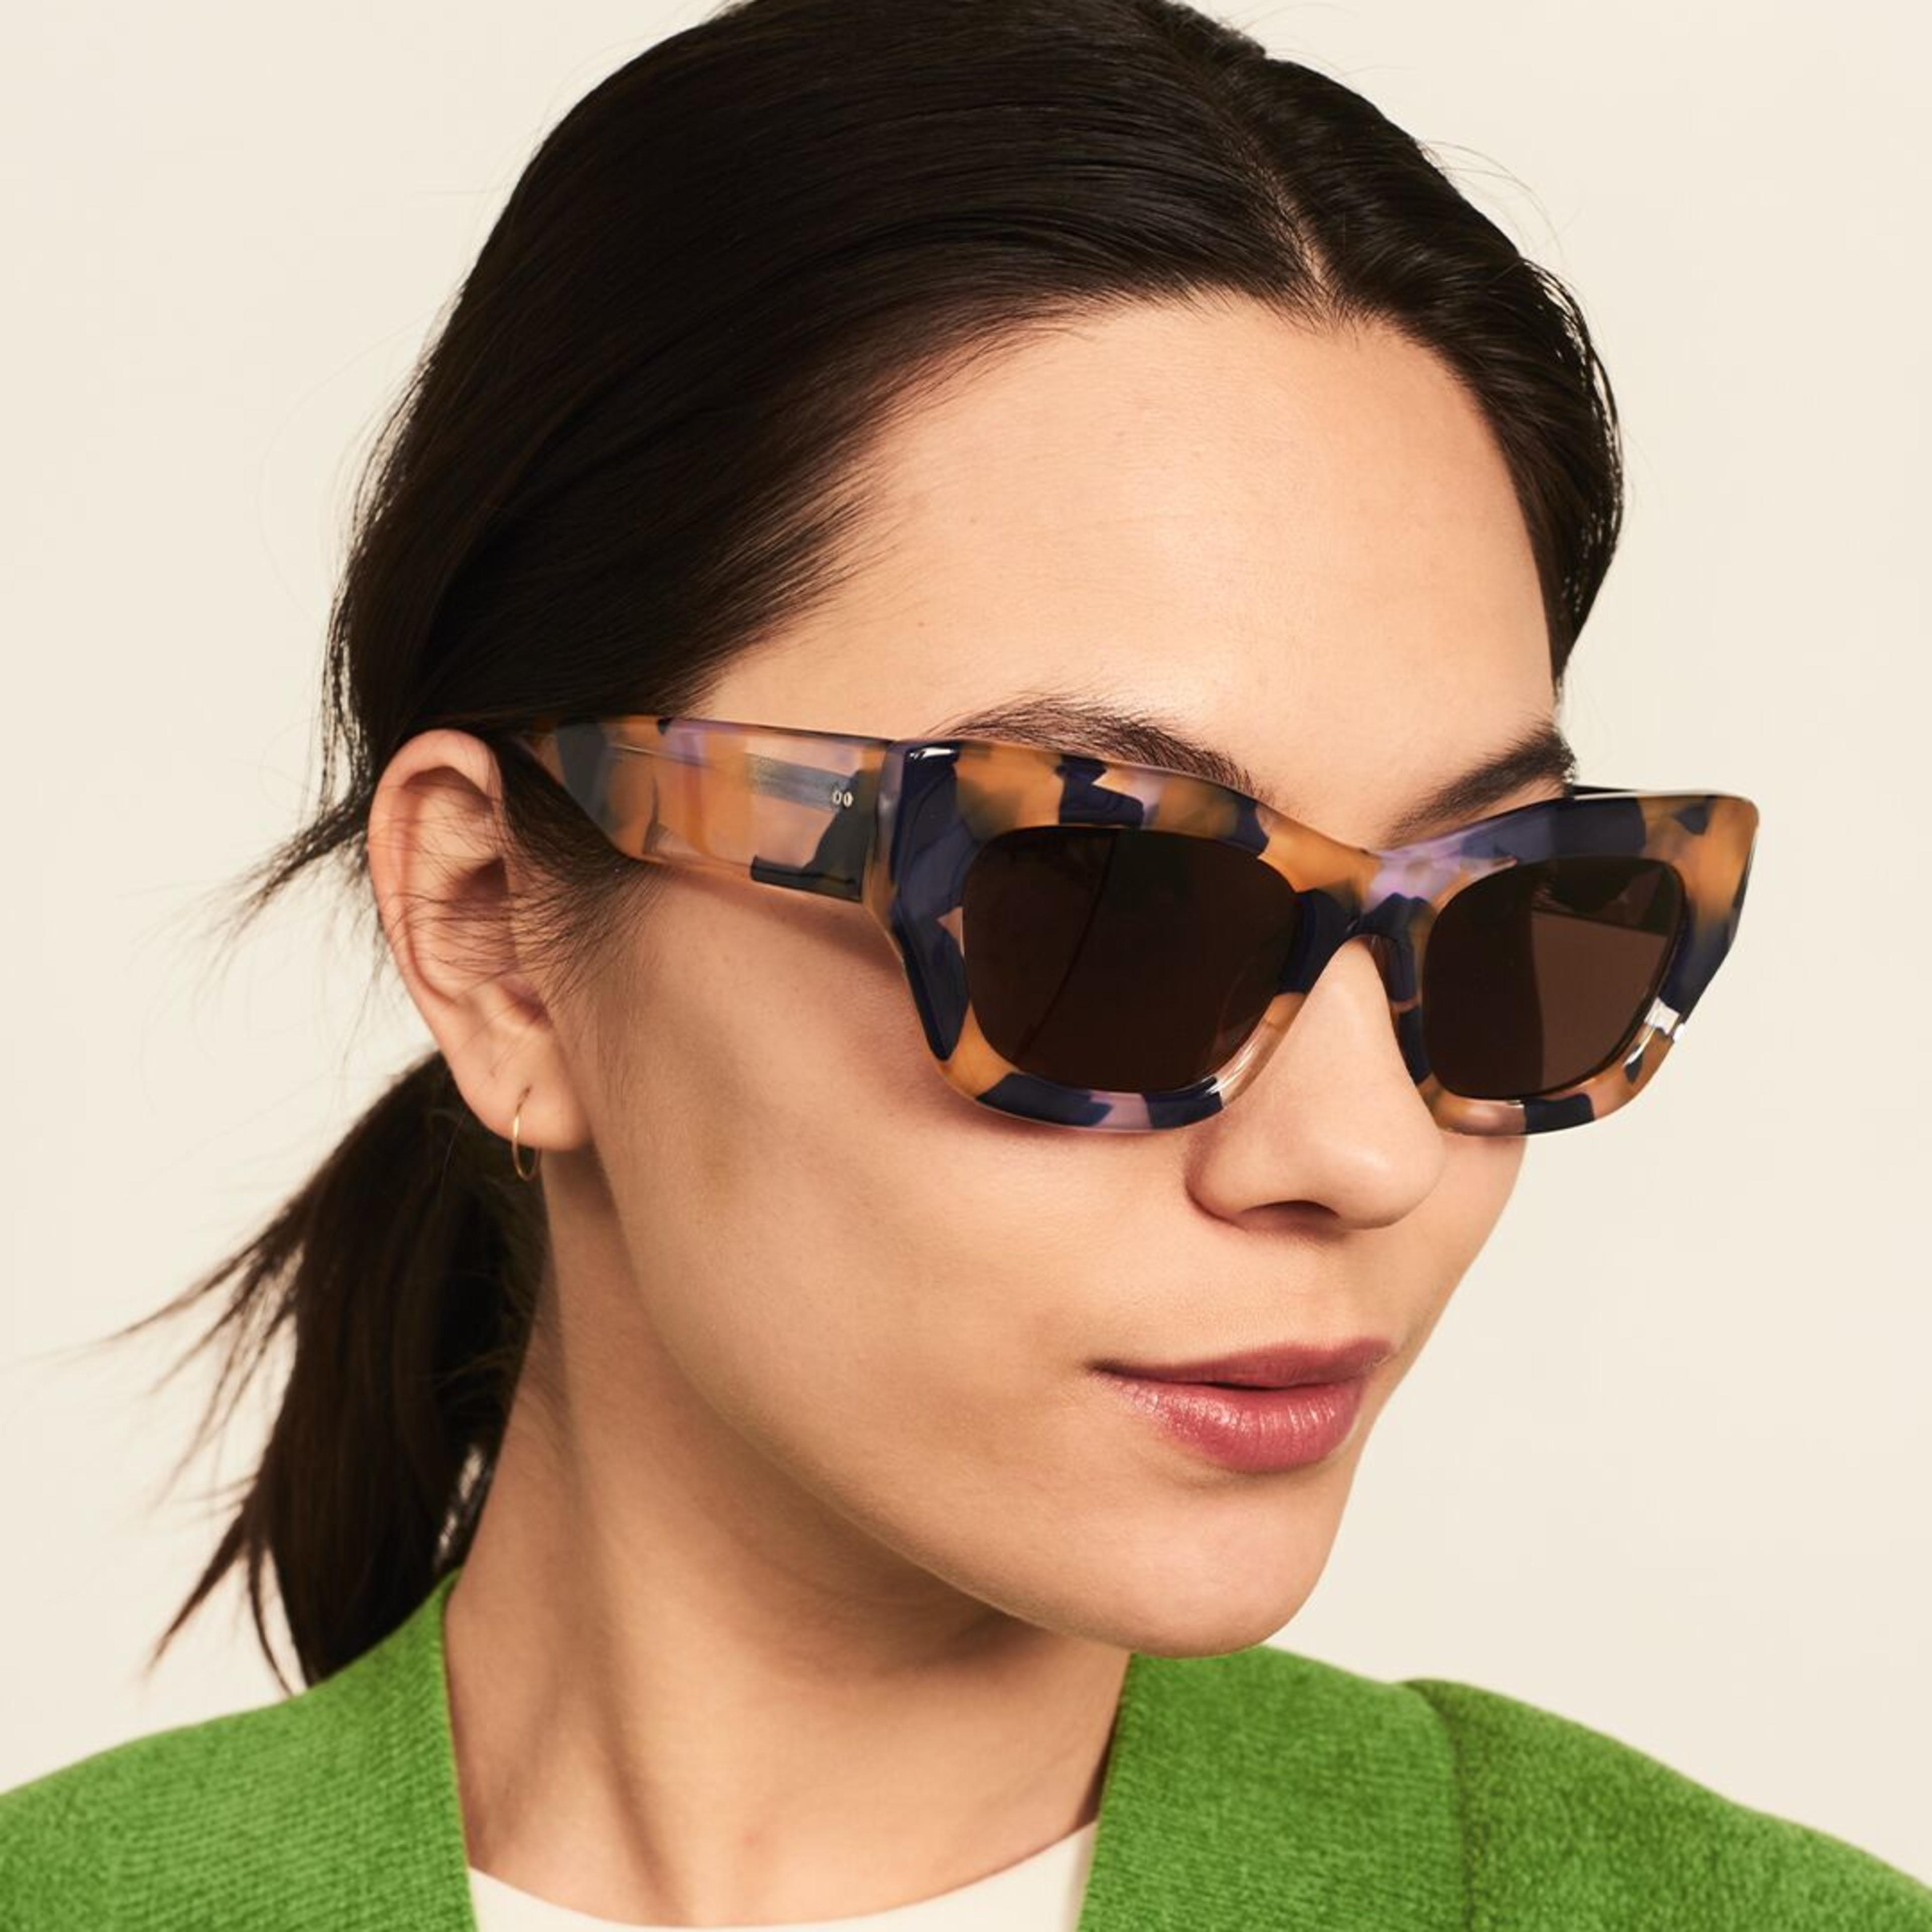 Ace & Tate Sunglasses |  Acetate in Brown, Orange, Purple